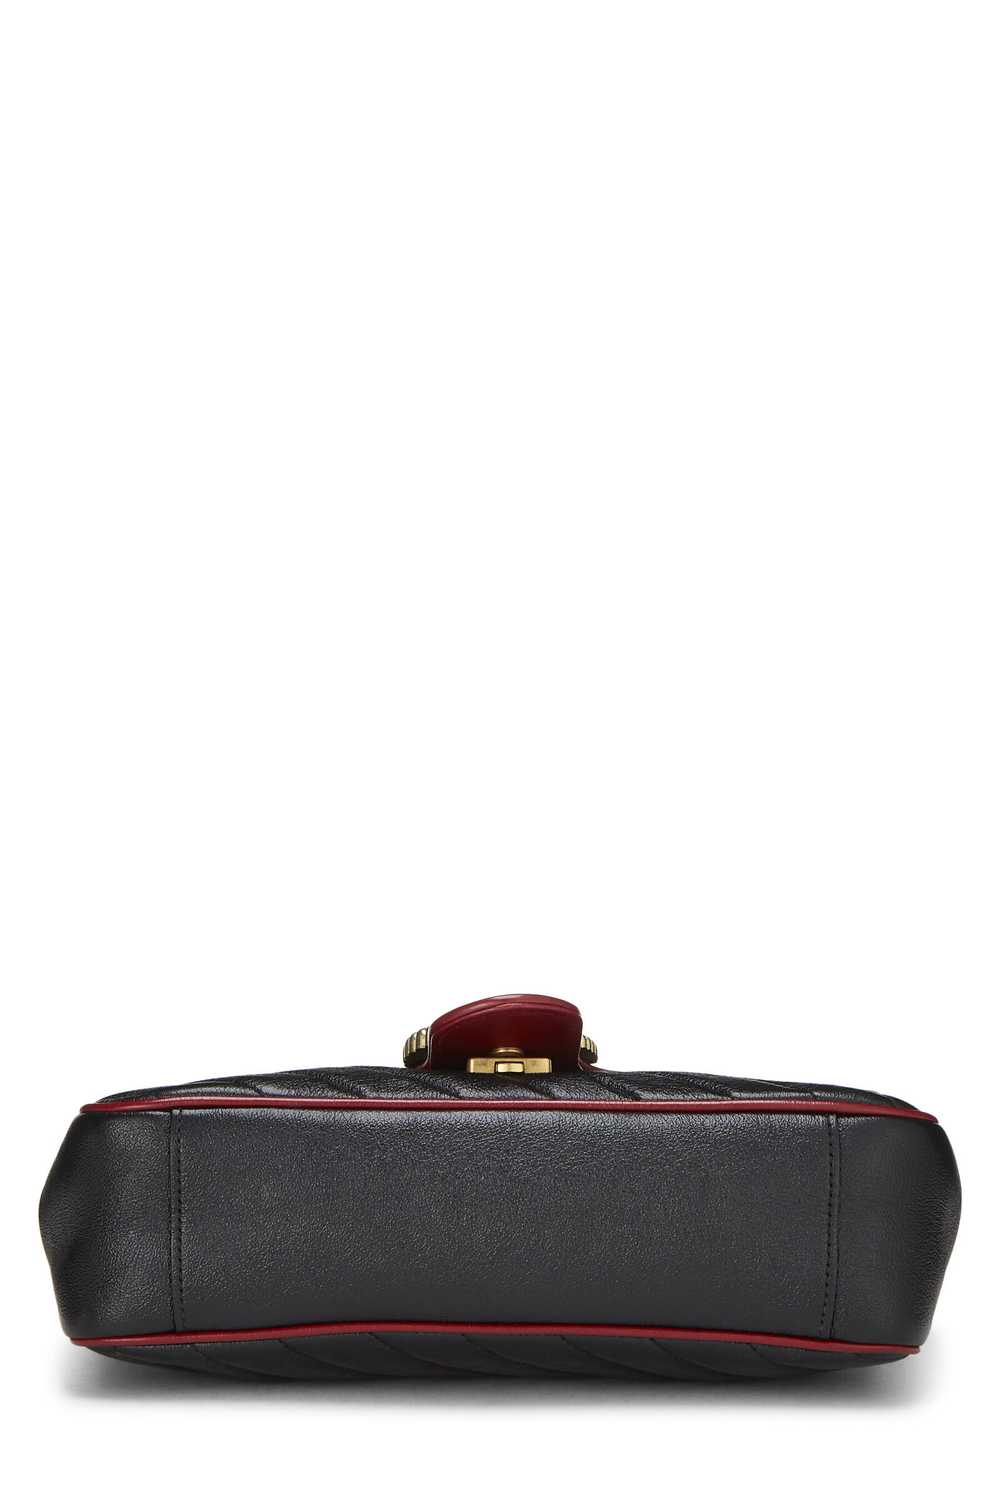 Black Leather Torchon Marmont Shoulder Bag Small - image 5